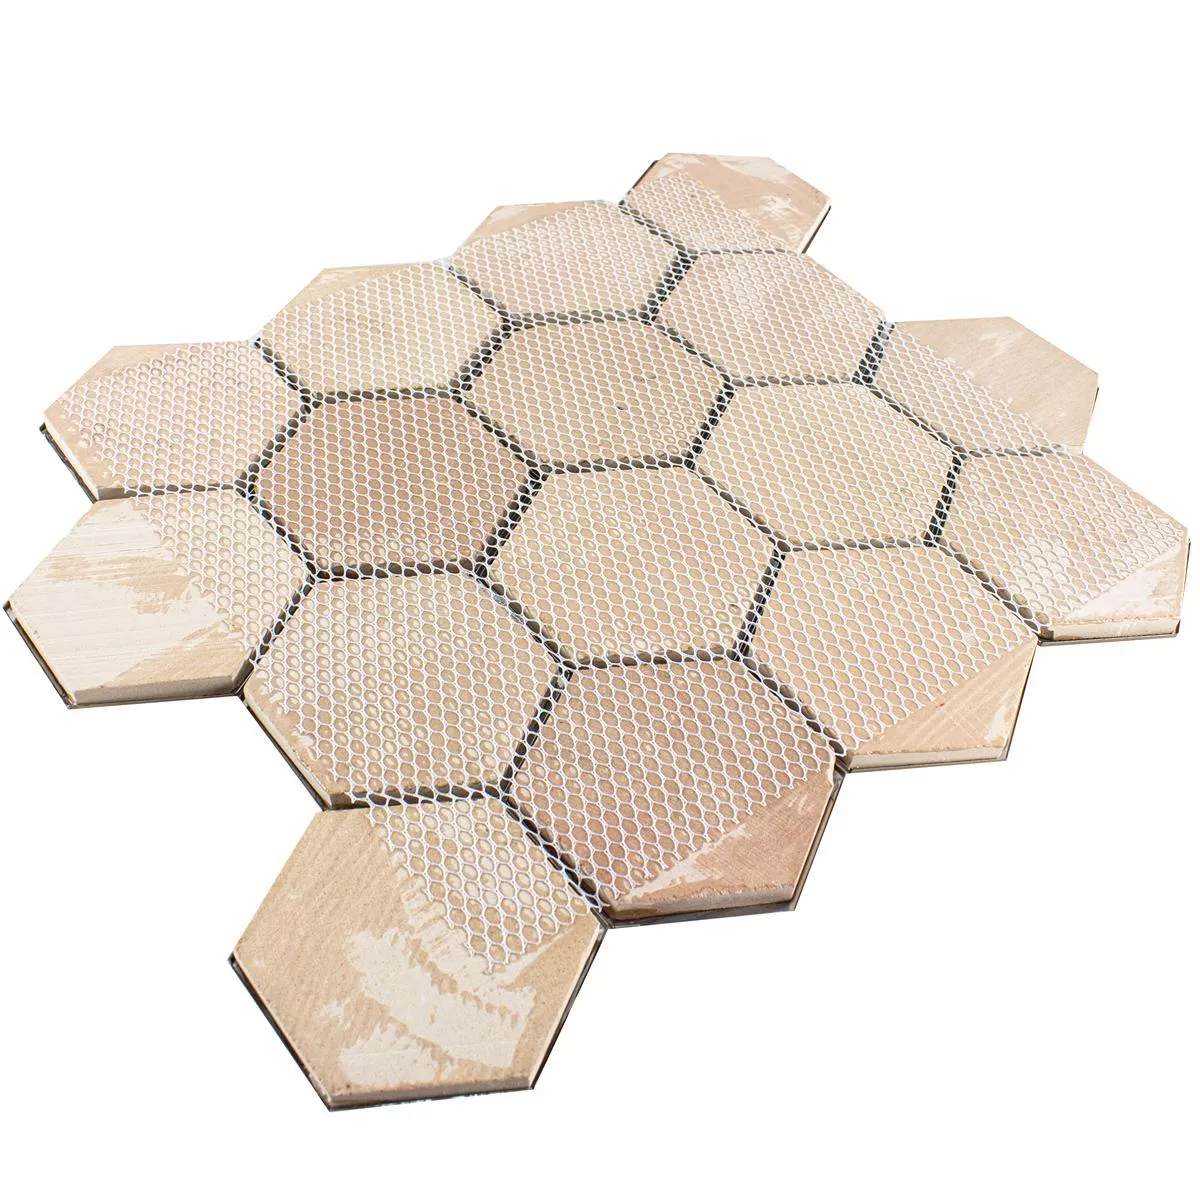 Prov Rostfritt Stål Mosaik Durango Hexagon 3D Koppar